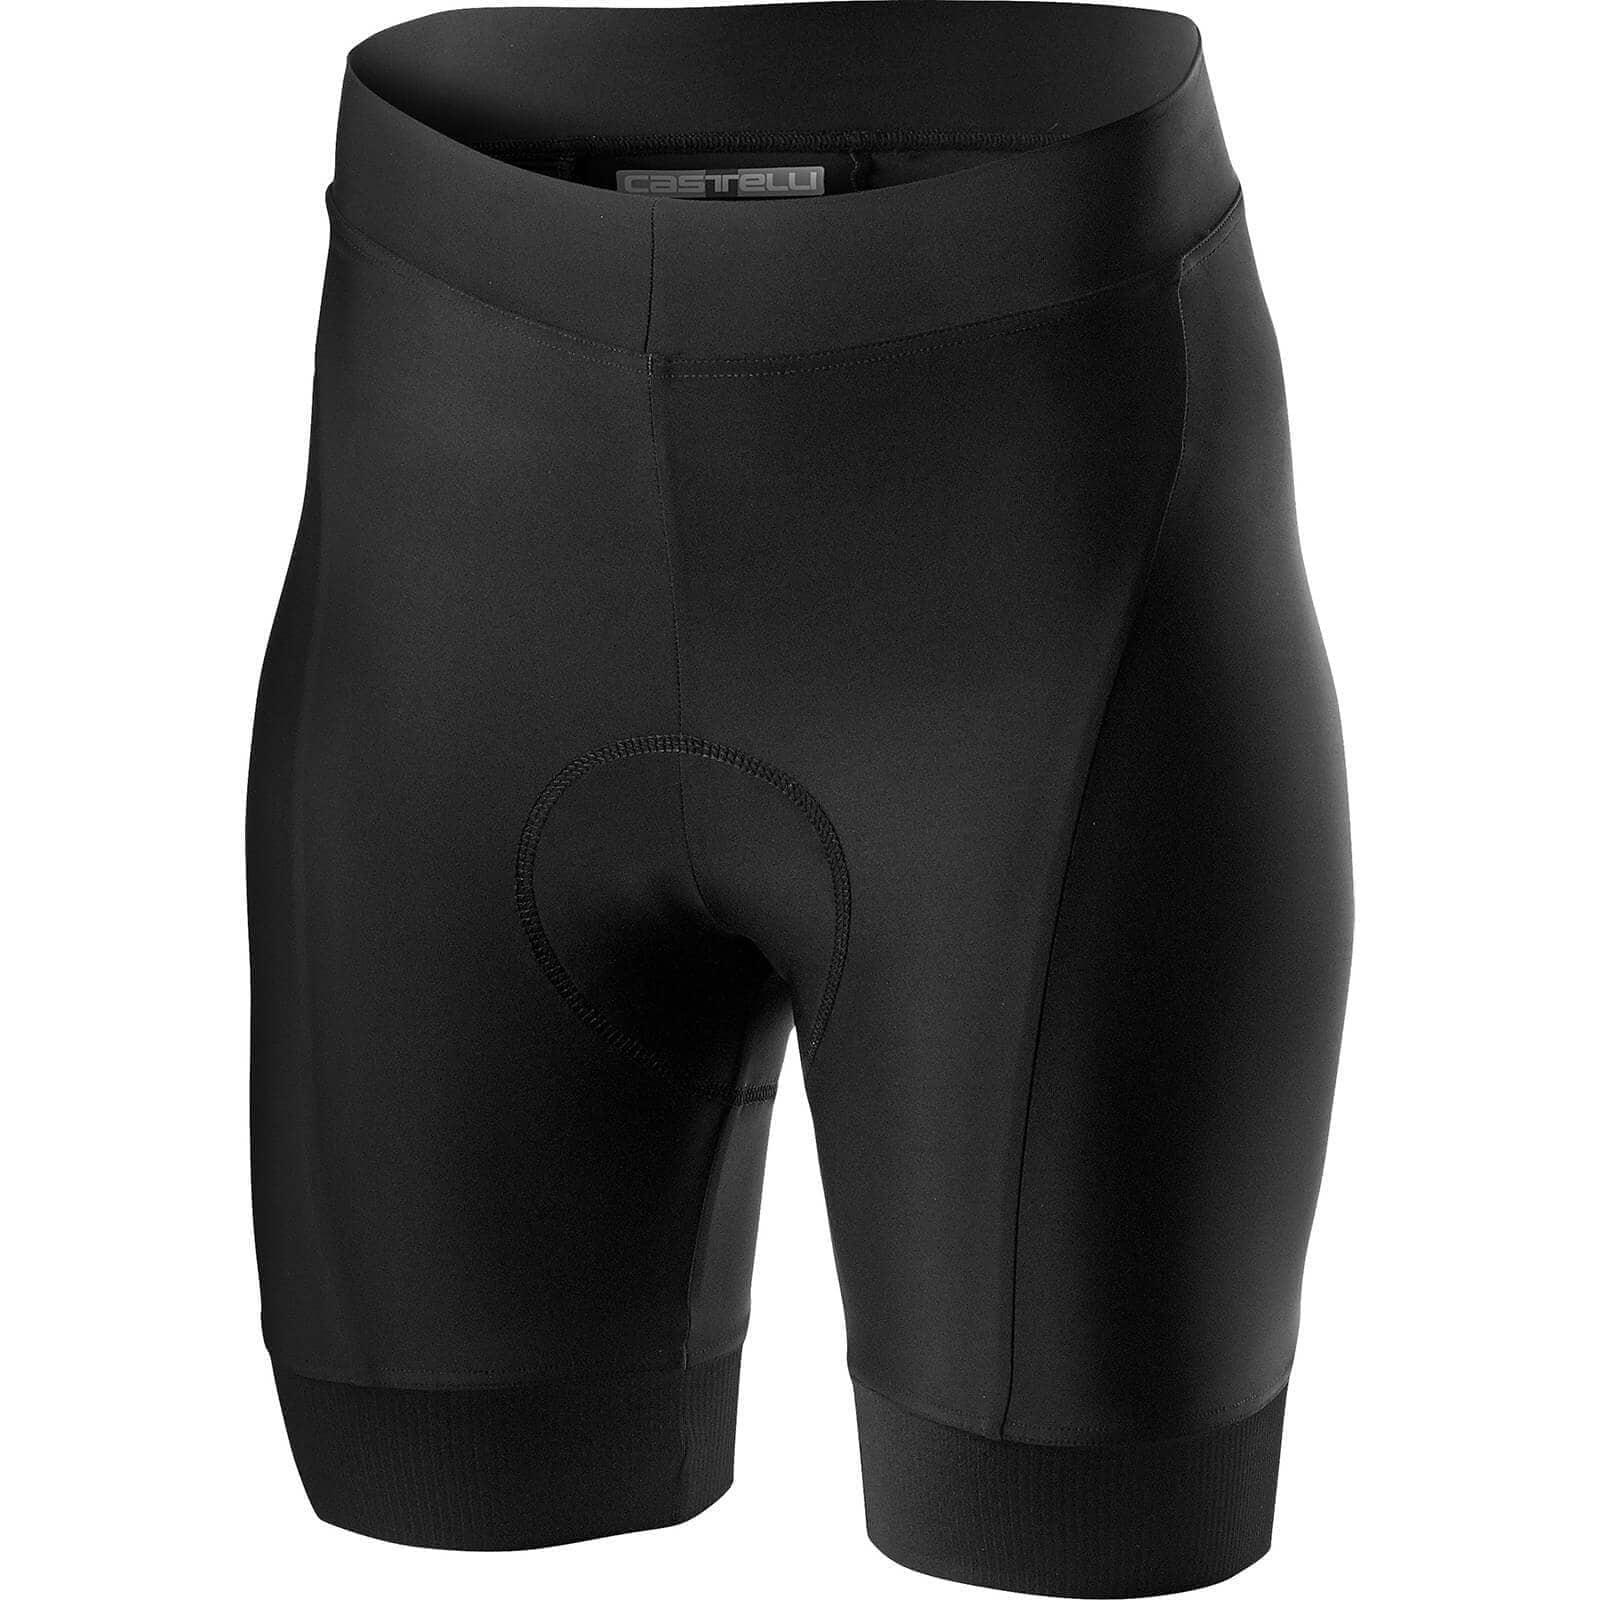 Castelli Prima Short Black/Dark Grey / XS Apparel - Clothing - Women's Shorts - Road